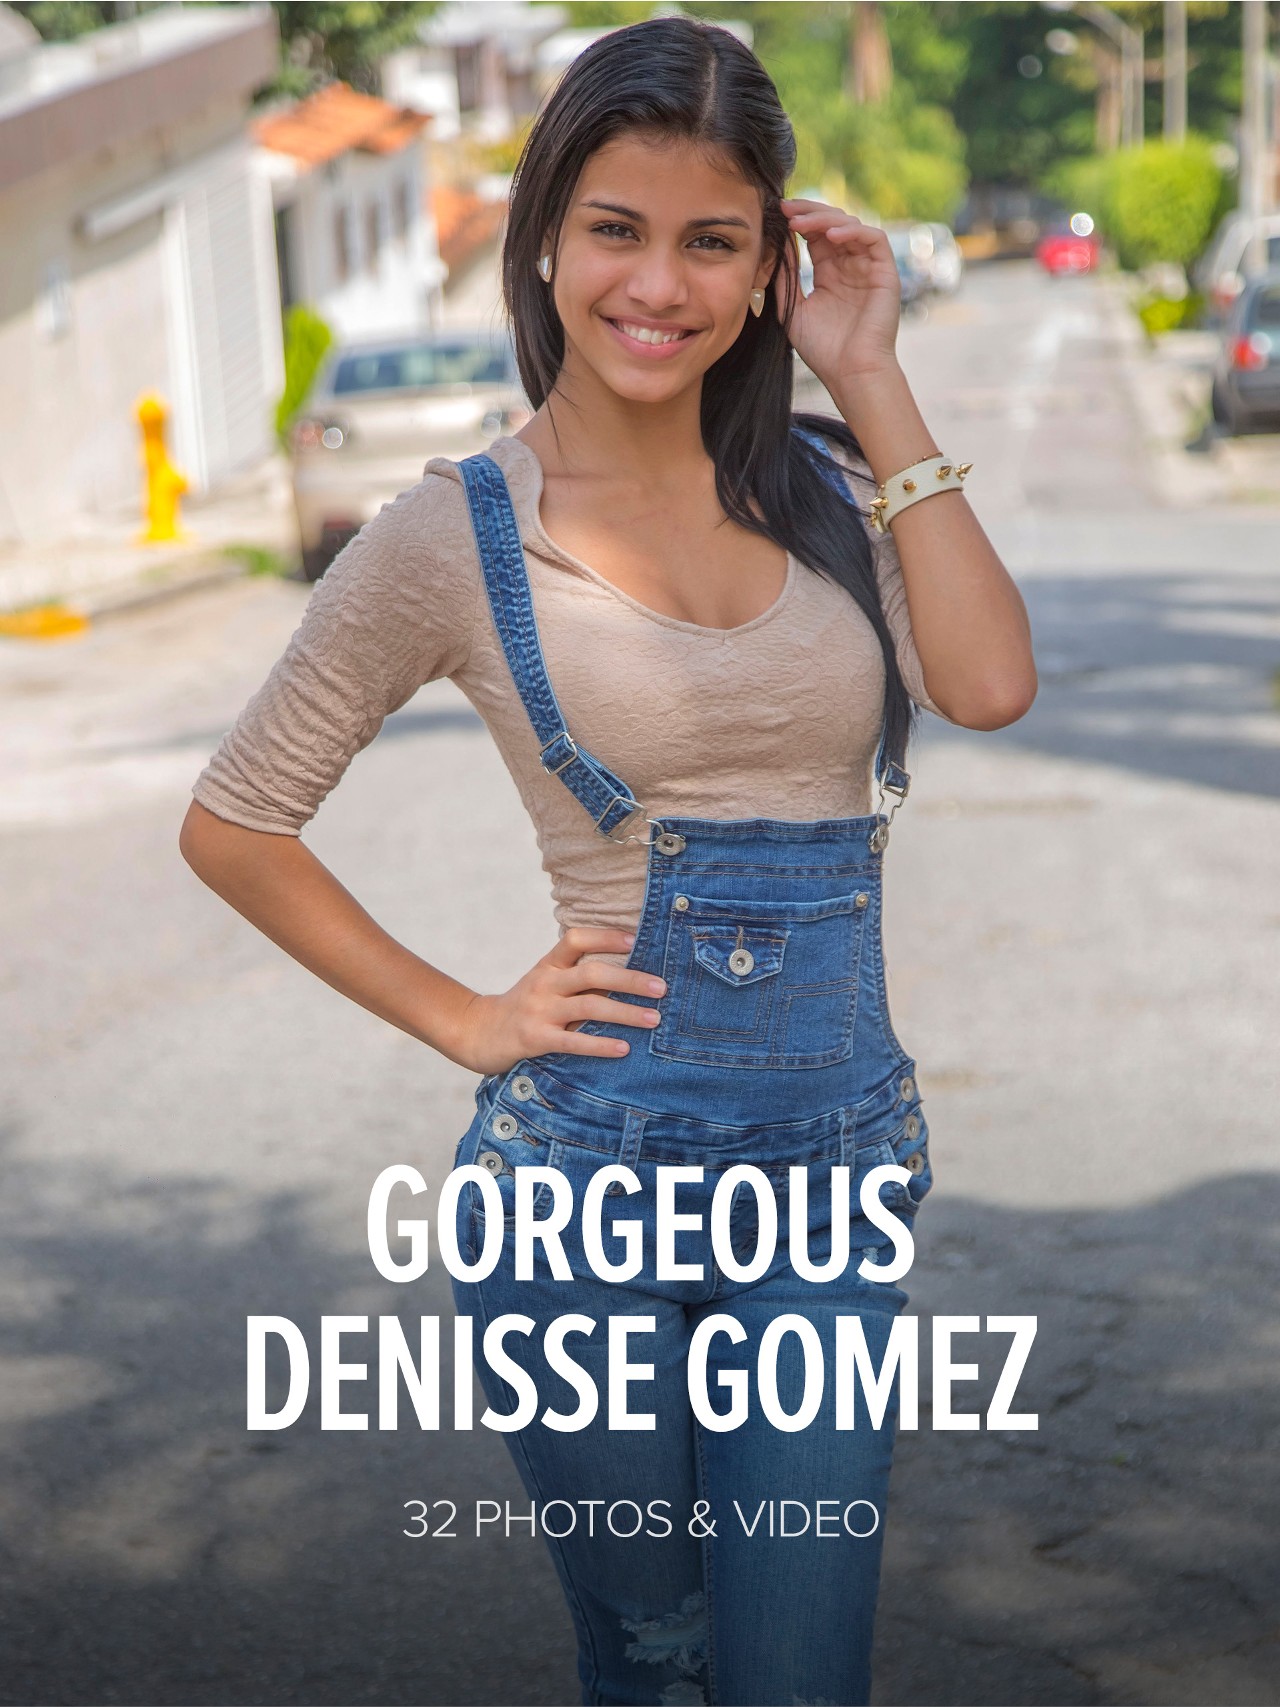 Denisse Gomez: No nude